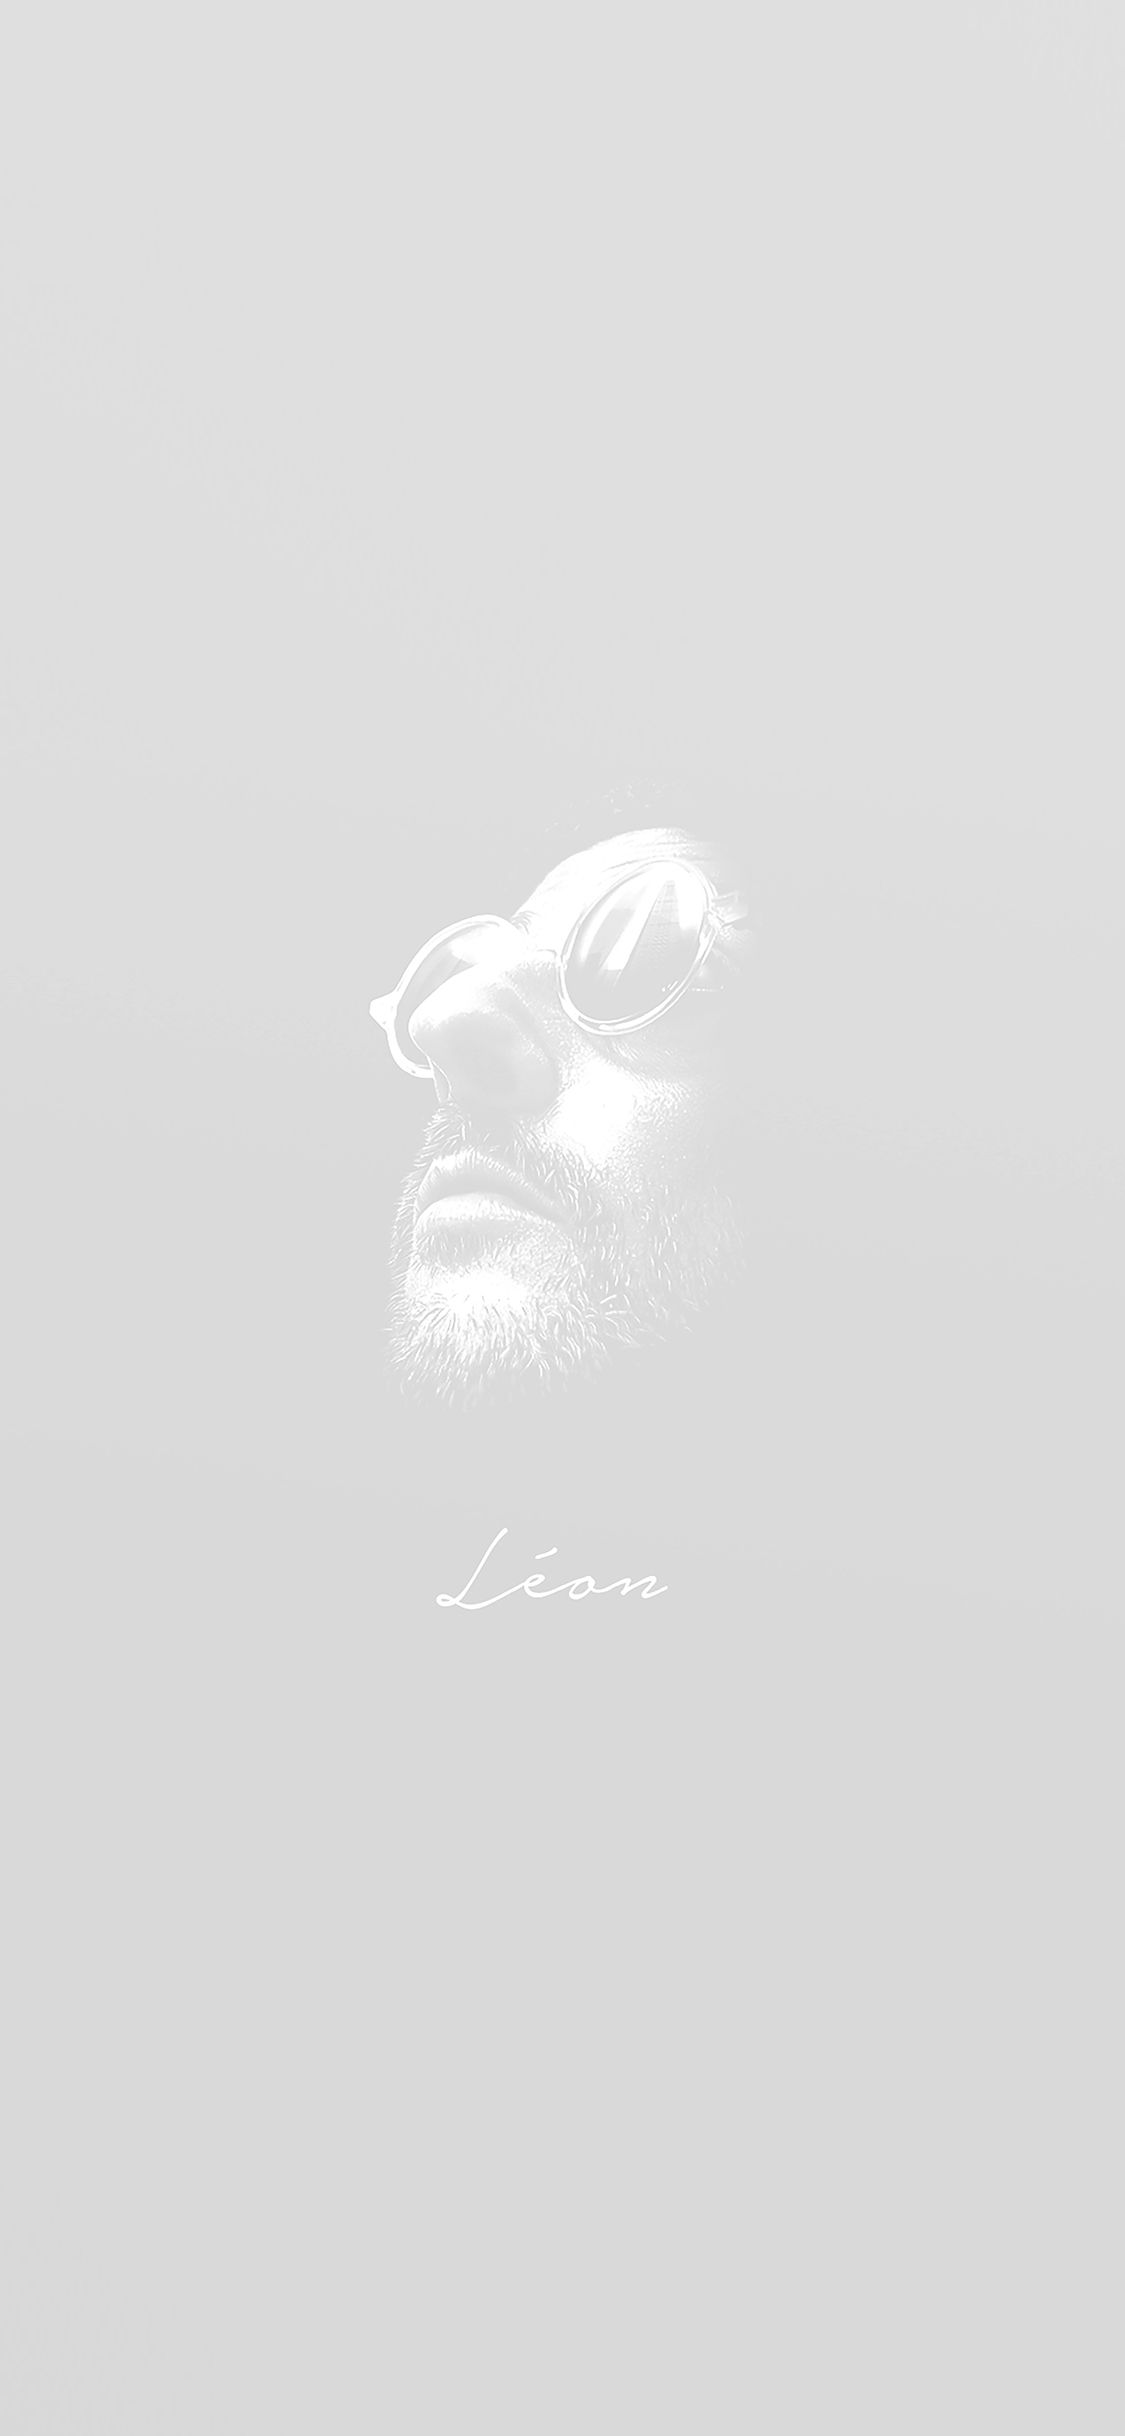 Leon Face Minimal White Simple Art